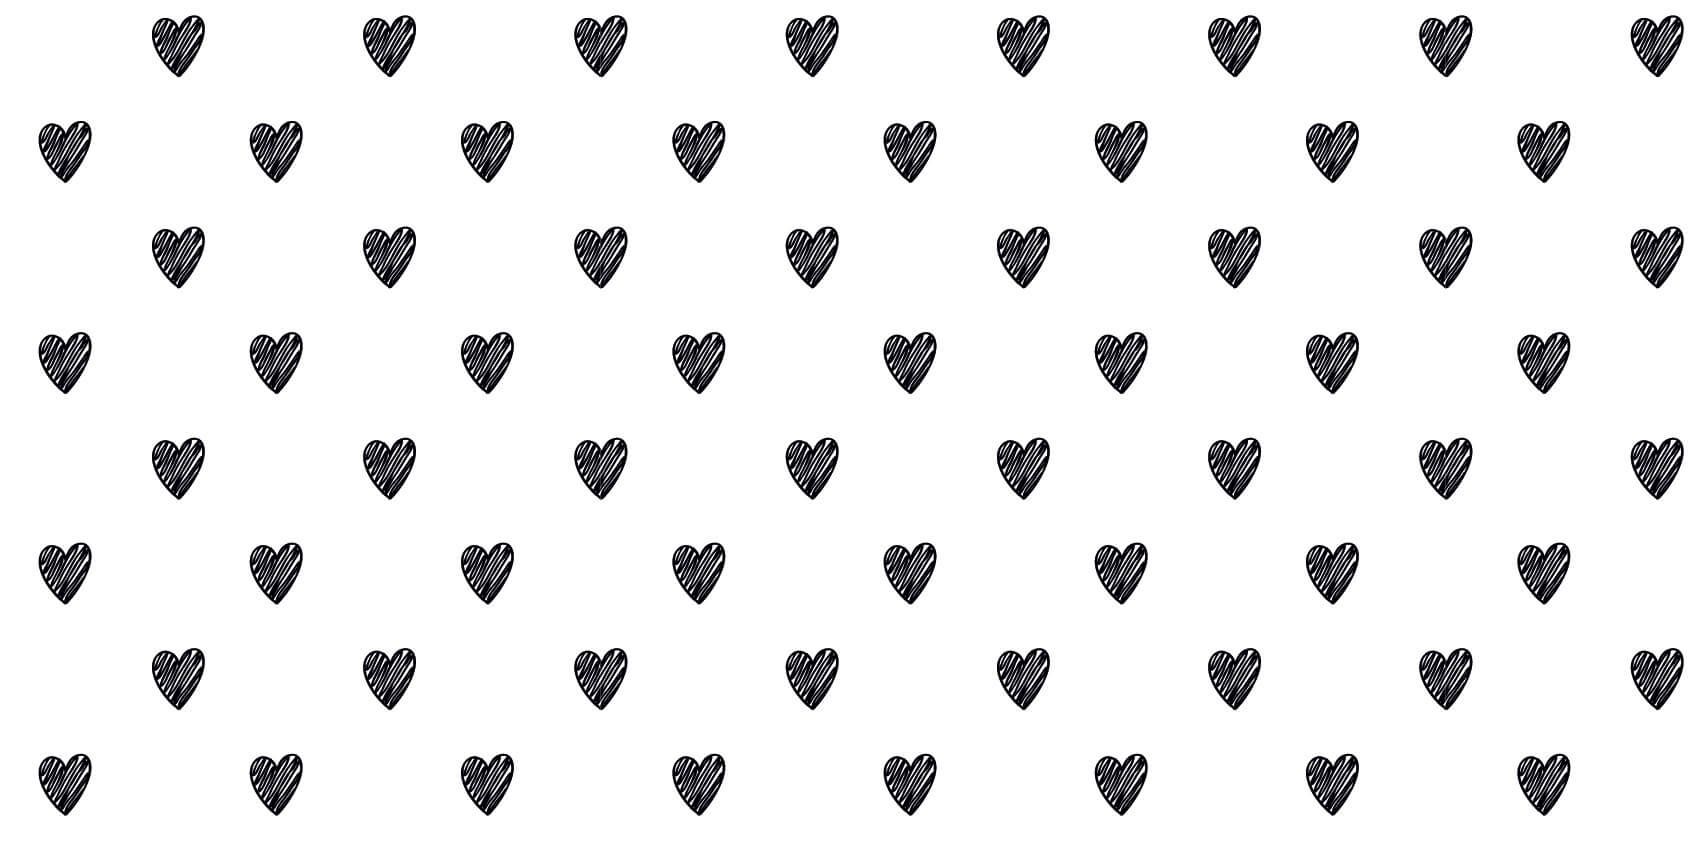 Black and white wallpaper - Black drawn hearts - Children's room